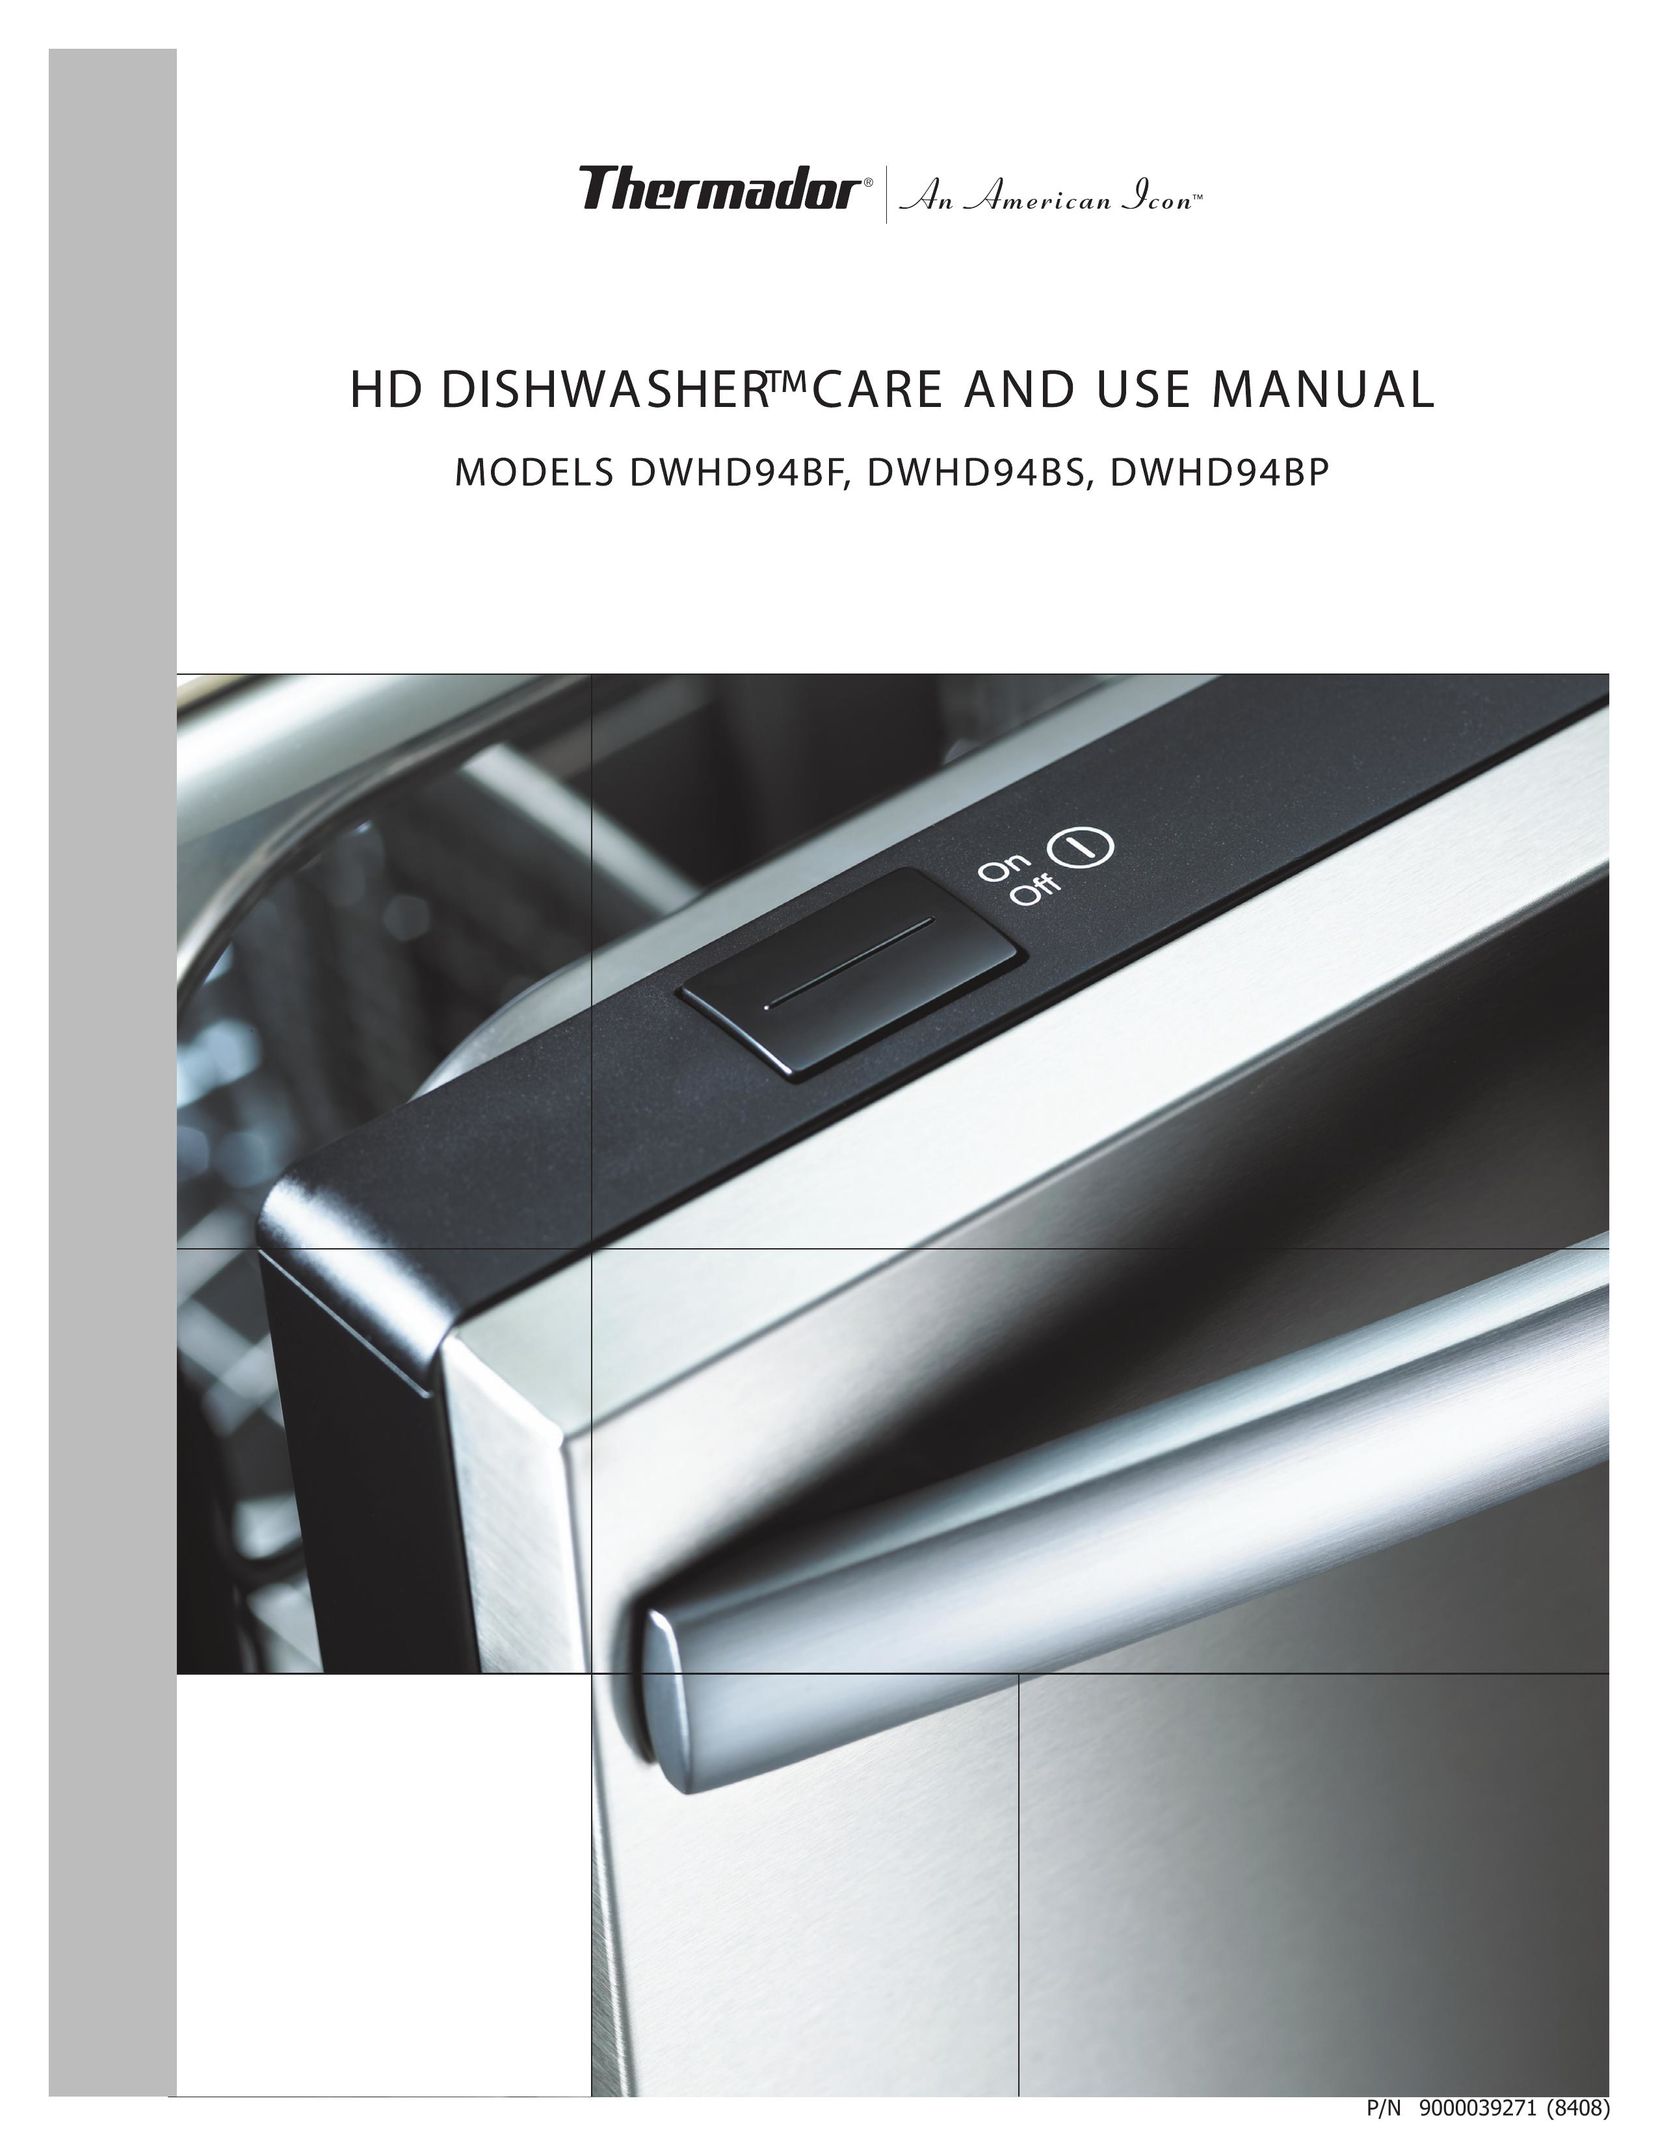 Thermador DWHD94BF Dishwasher User Manual